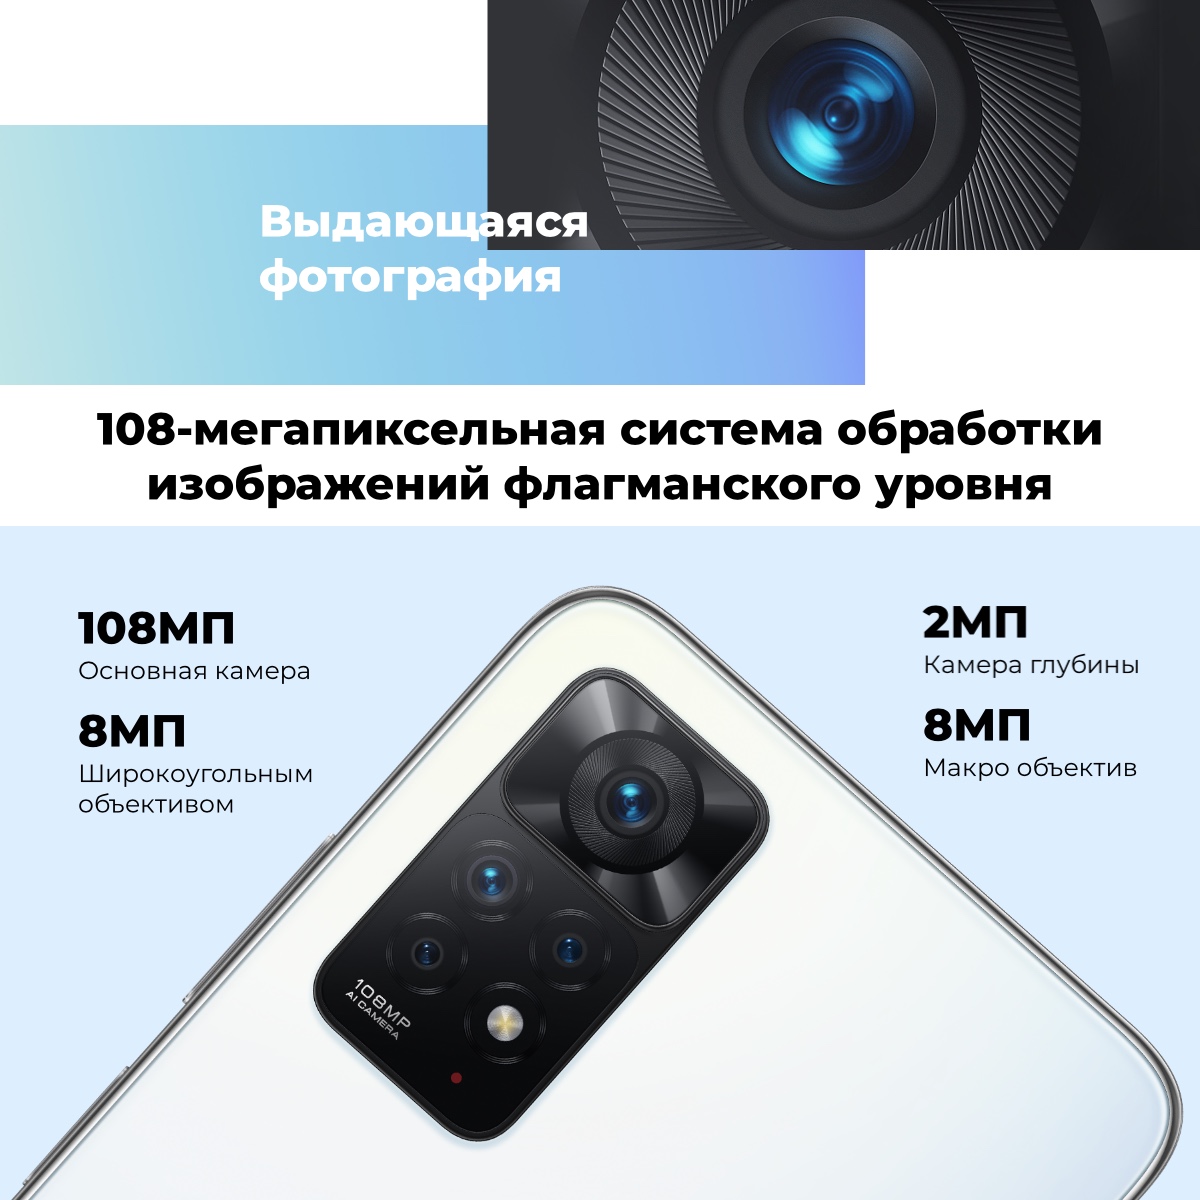 Смартфон Redmi Note 11 Pro 6/128Gb Polar White Global